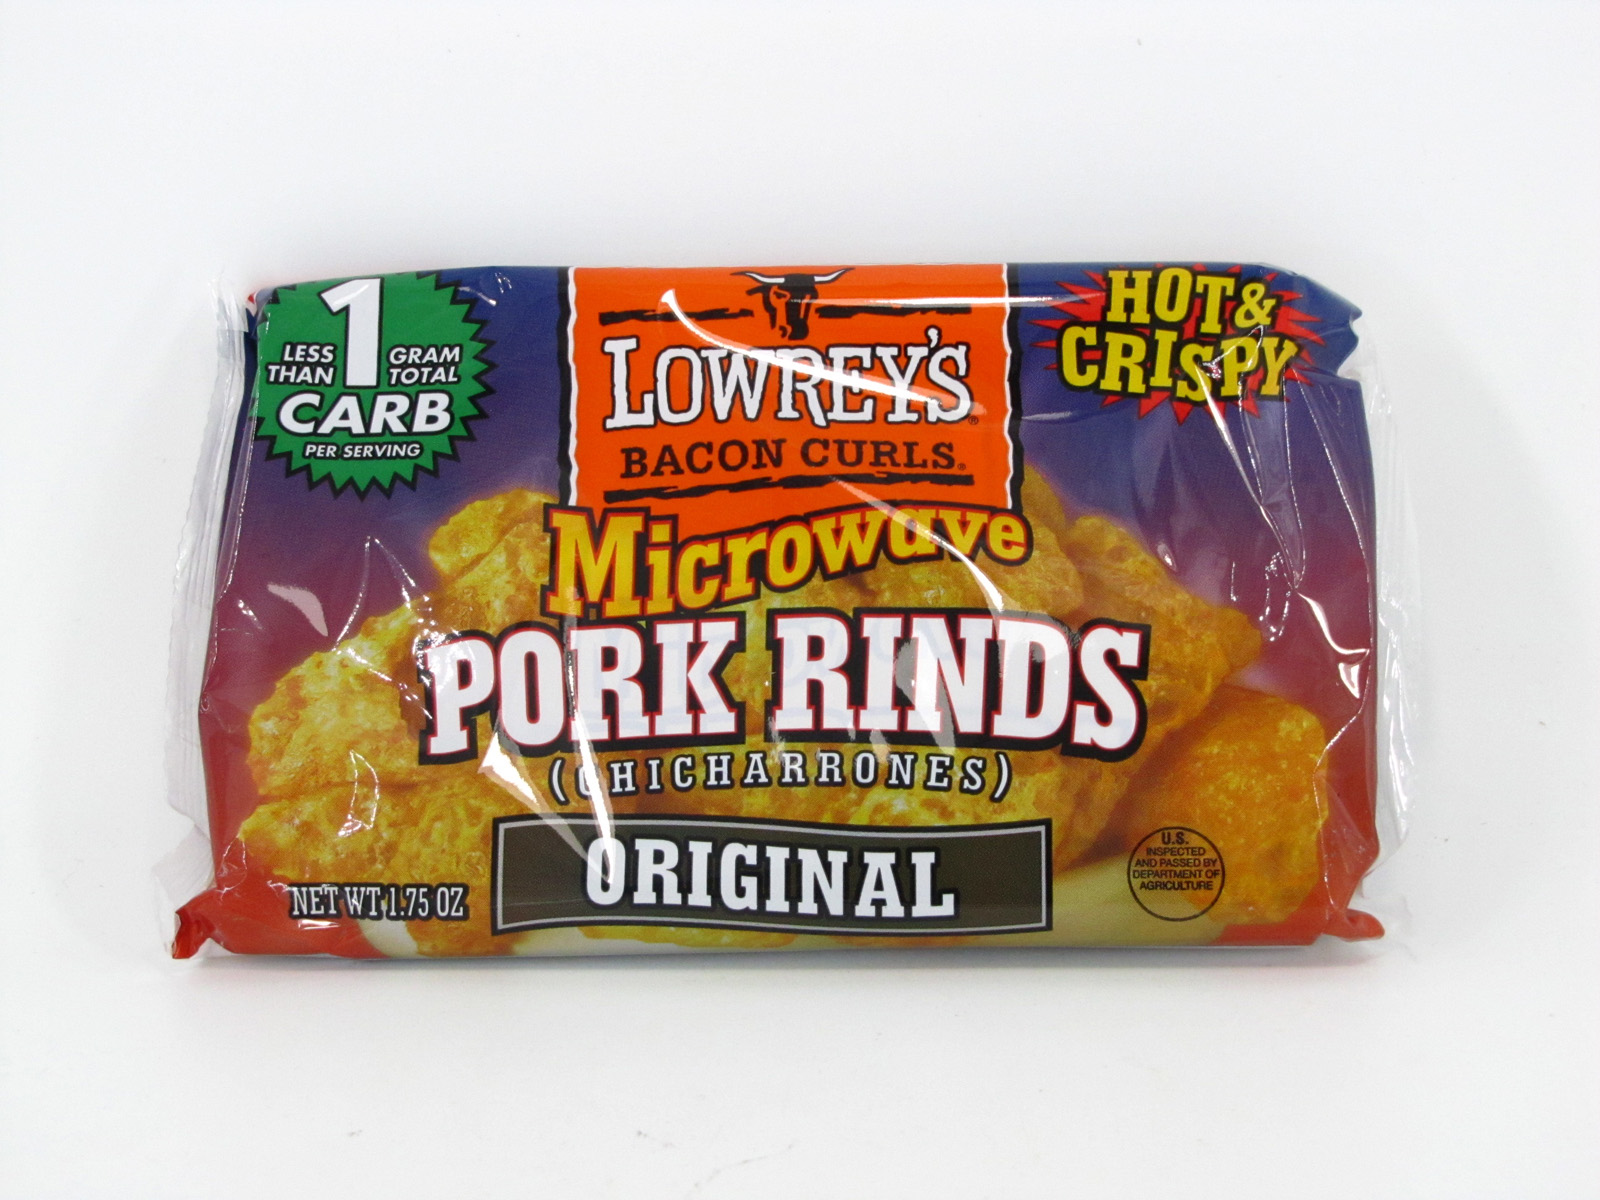 Pork Rinds - Original - front view